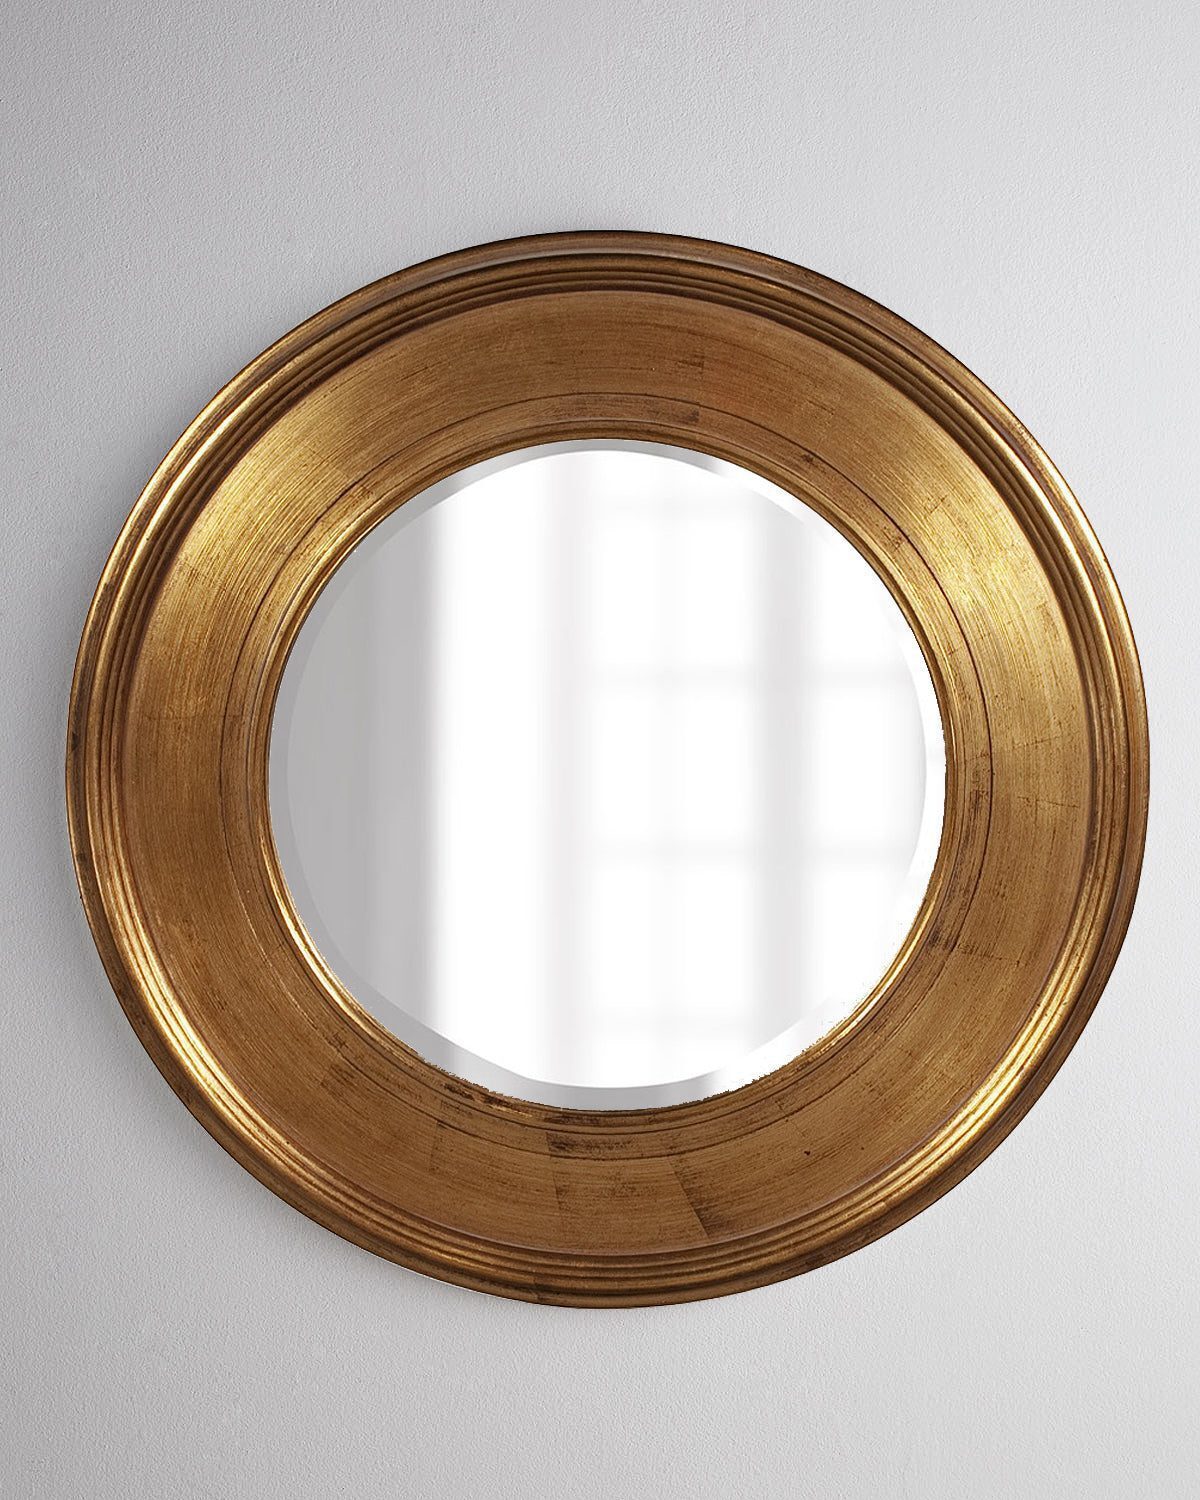 Зеркало gold. 17-6604gold зеркало диам.80 см_s2. Зеркало круглое. Круглое зеркало в металлической раме. Круглое зеркало в золотой раме.